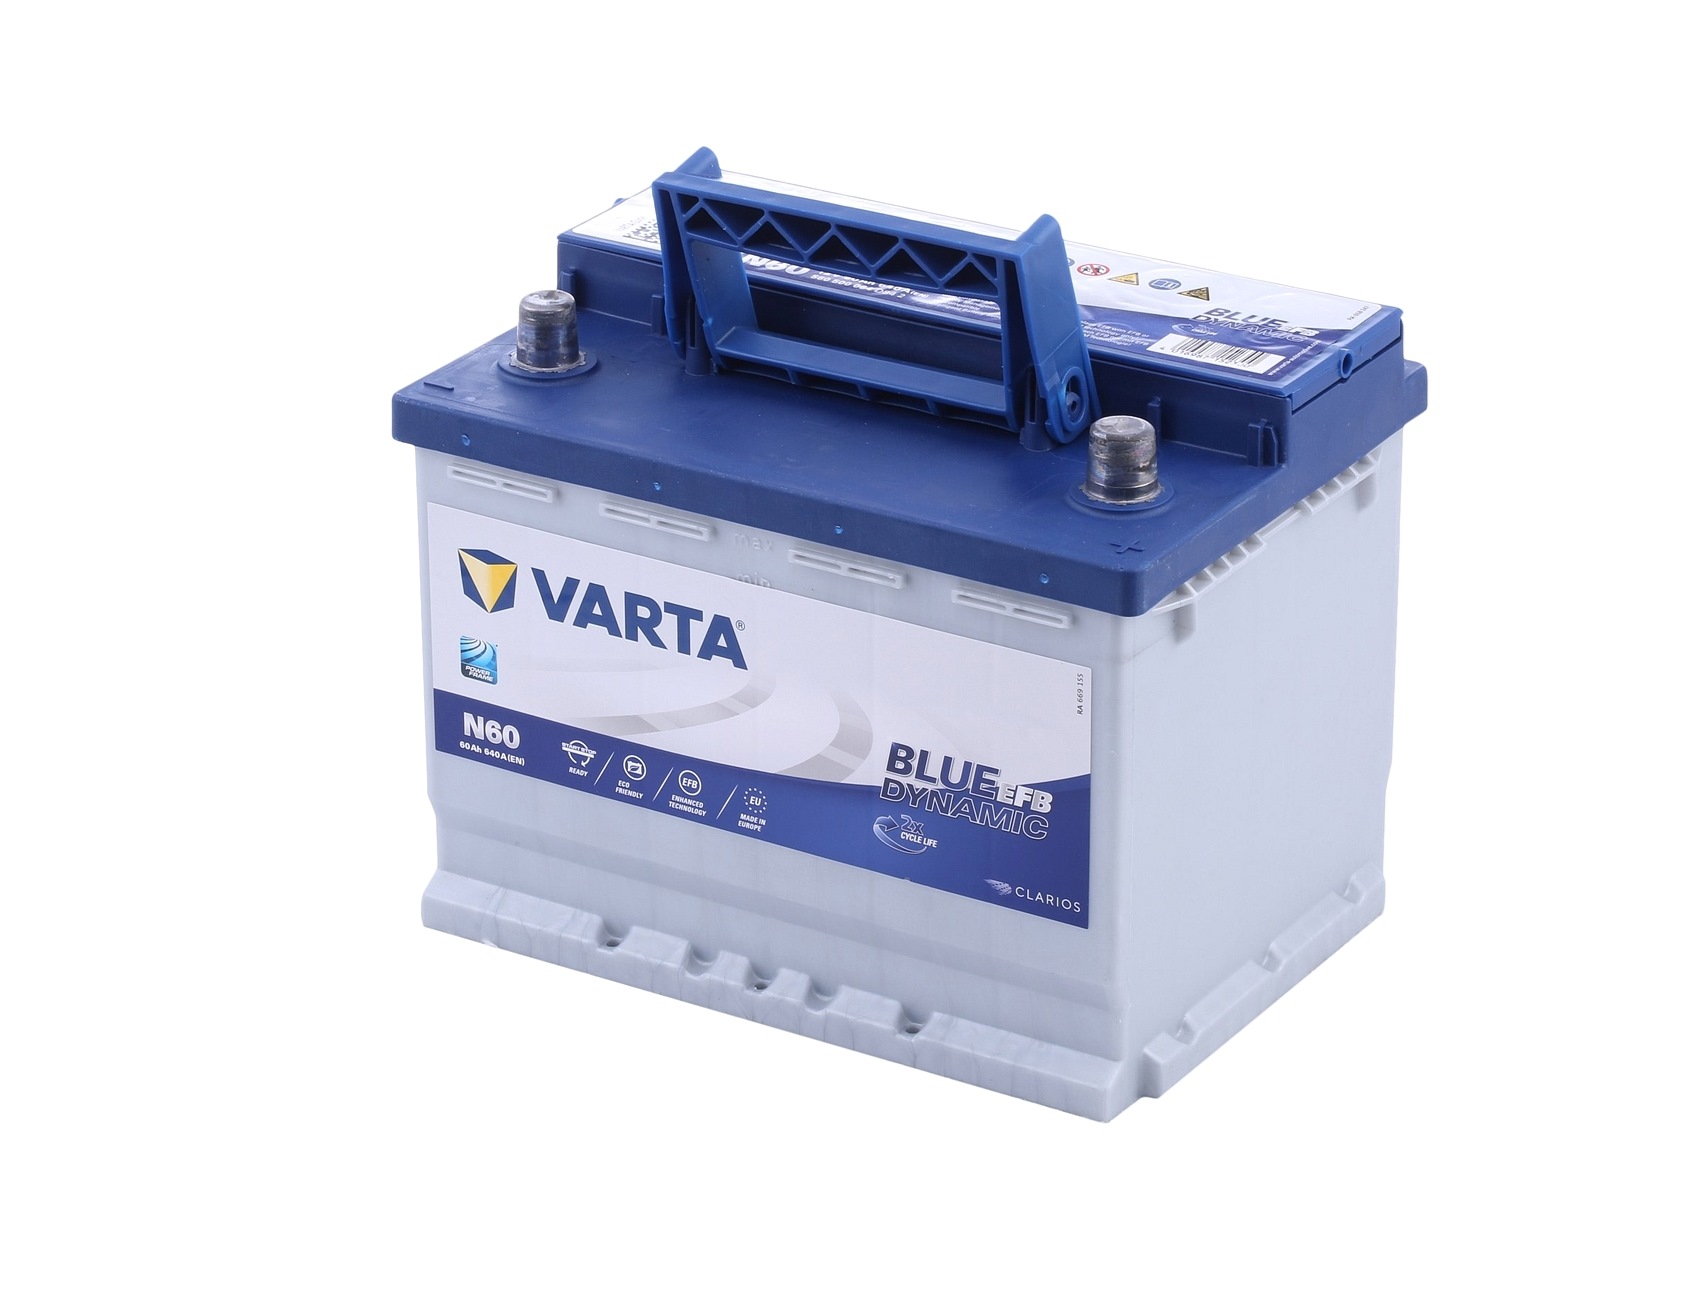 VARTA BLUE dynamic EFB, N60 560500064D842 Autobatterie 12V 60Ah 640A B13 EFB-Batterie